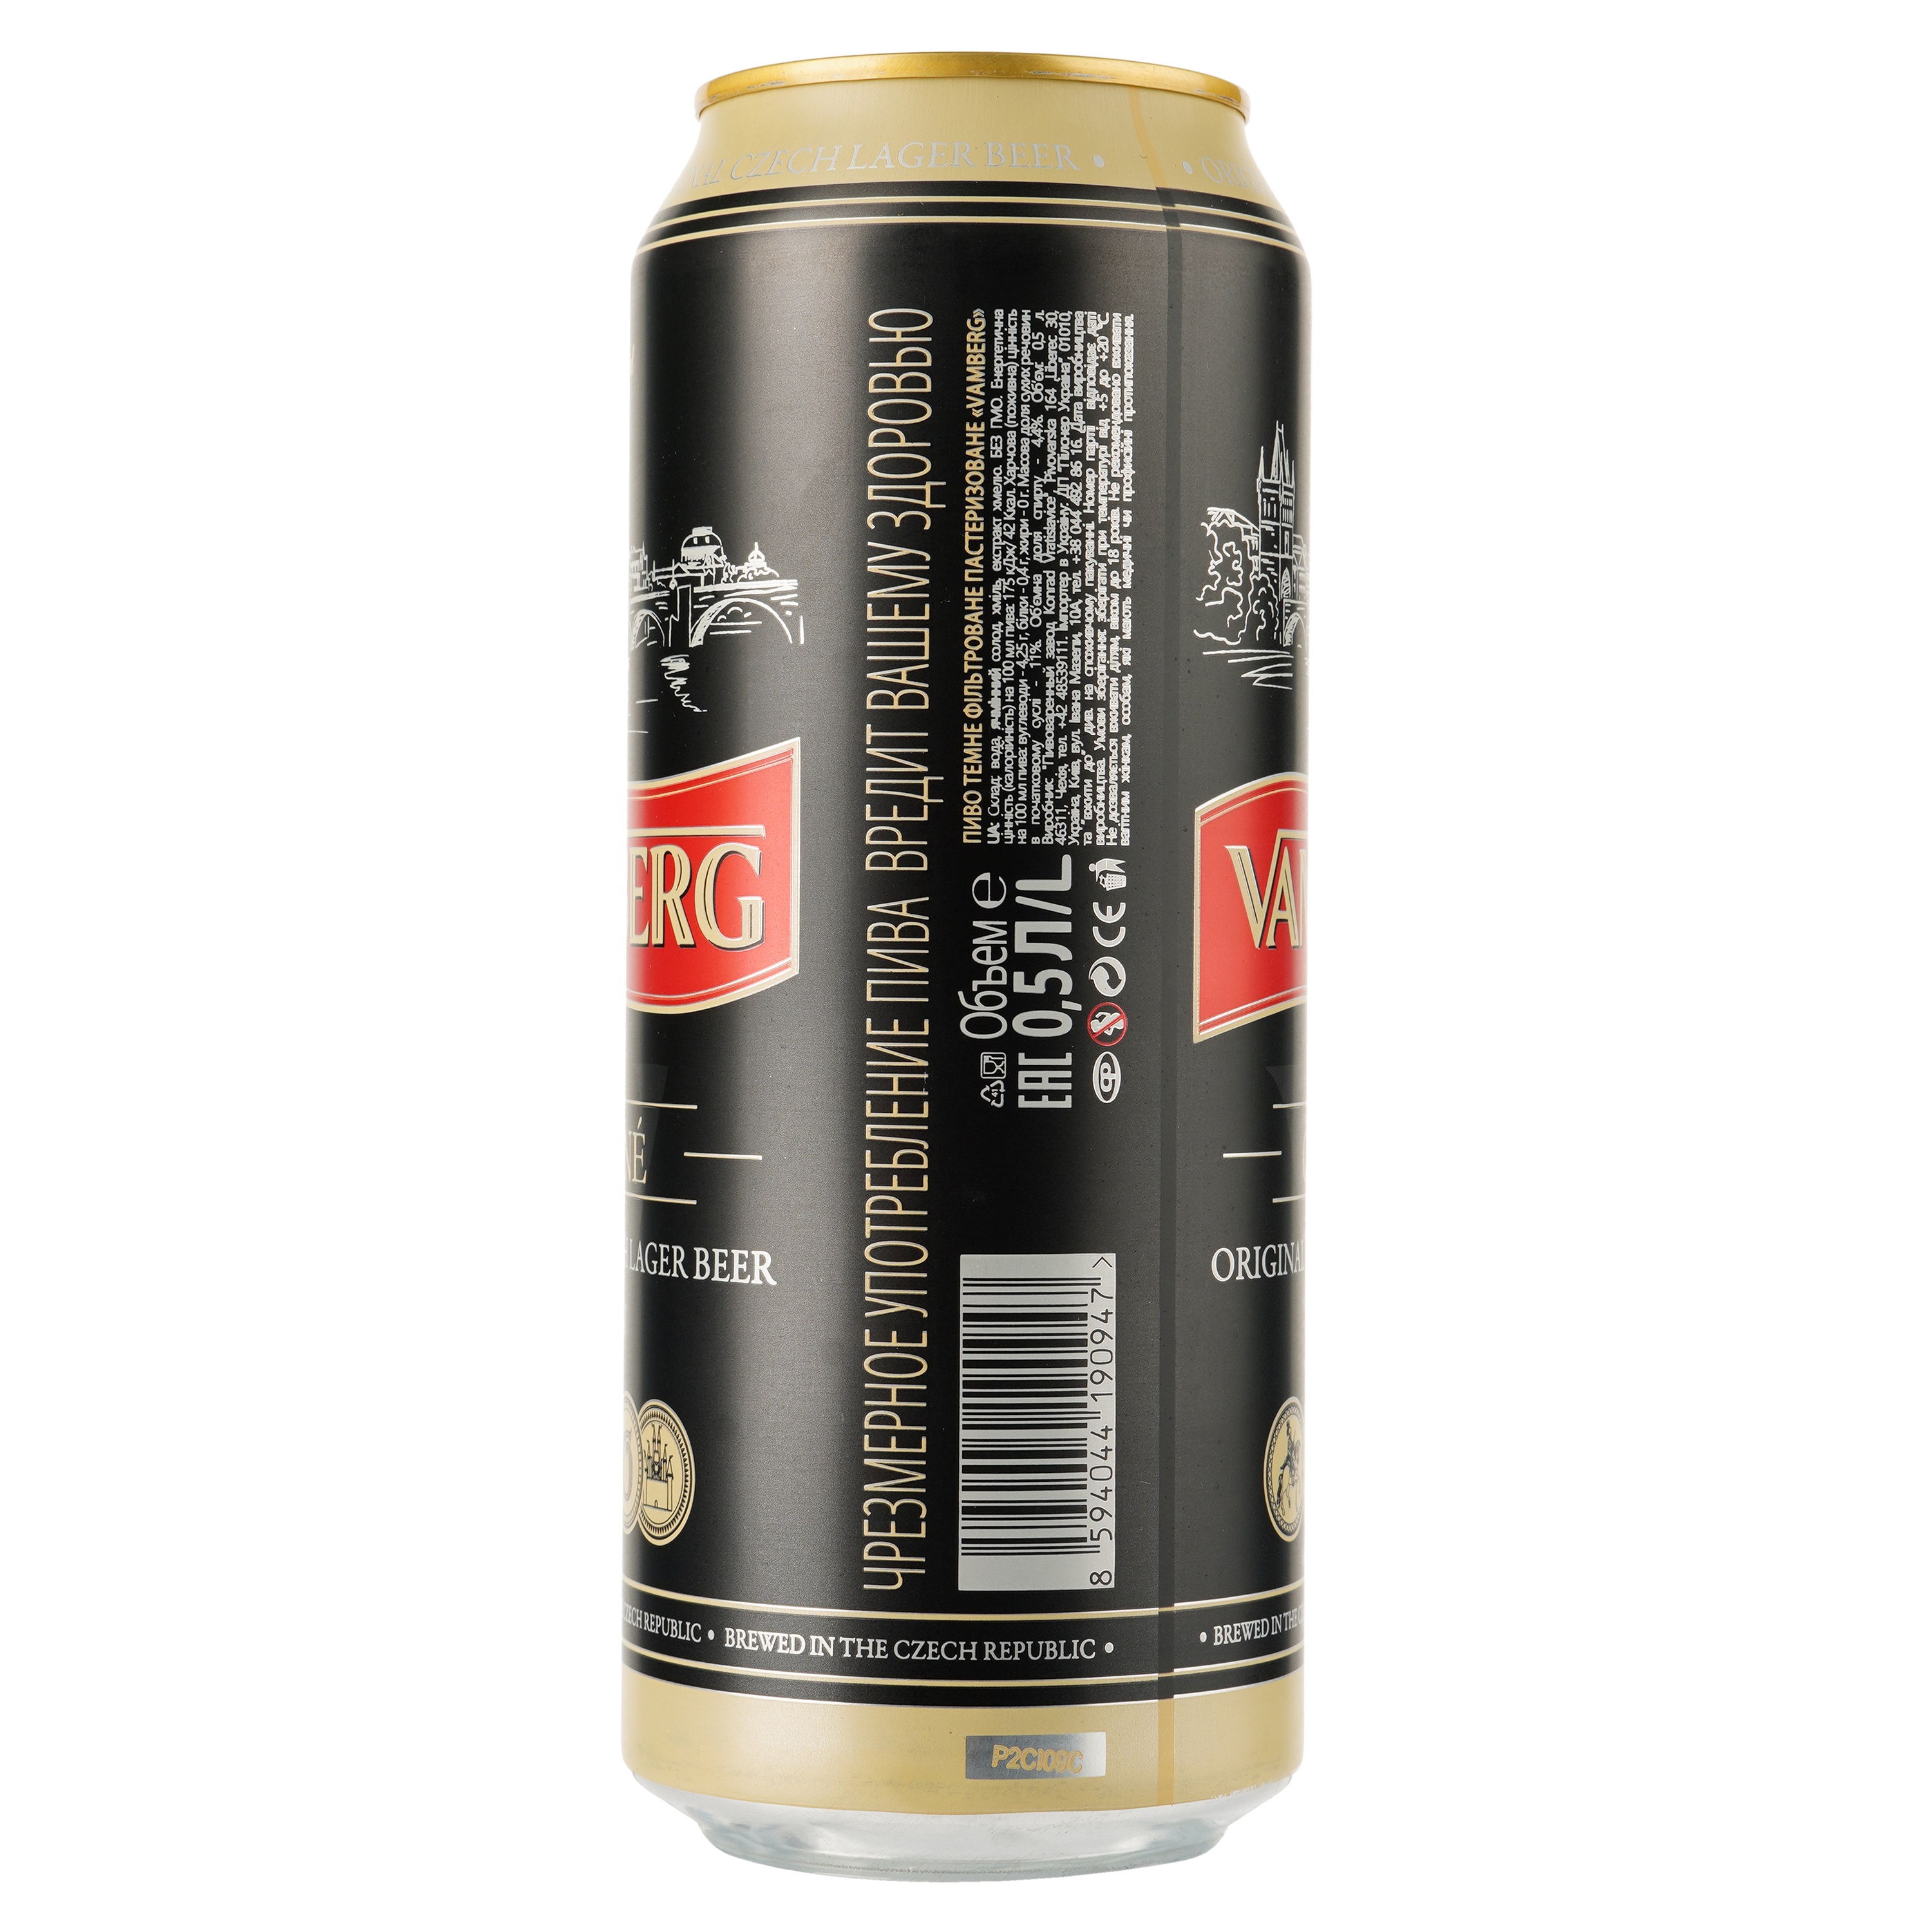 Пиво Vamberg Dark Lager, темное, фильтрованное, 4,4%, ж/б, 0,5 л - фото 3